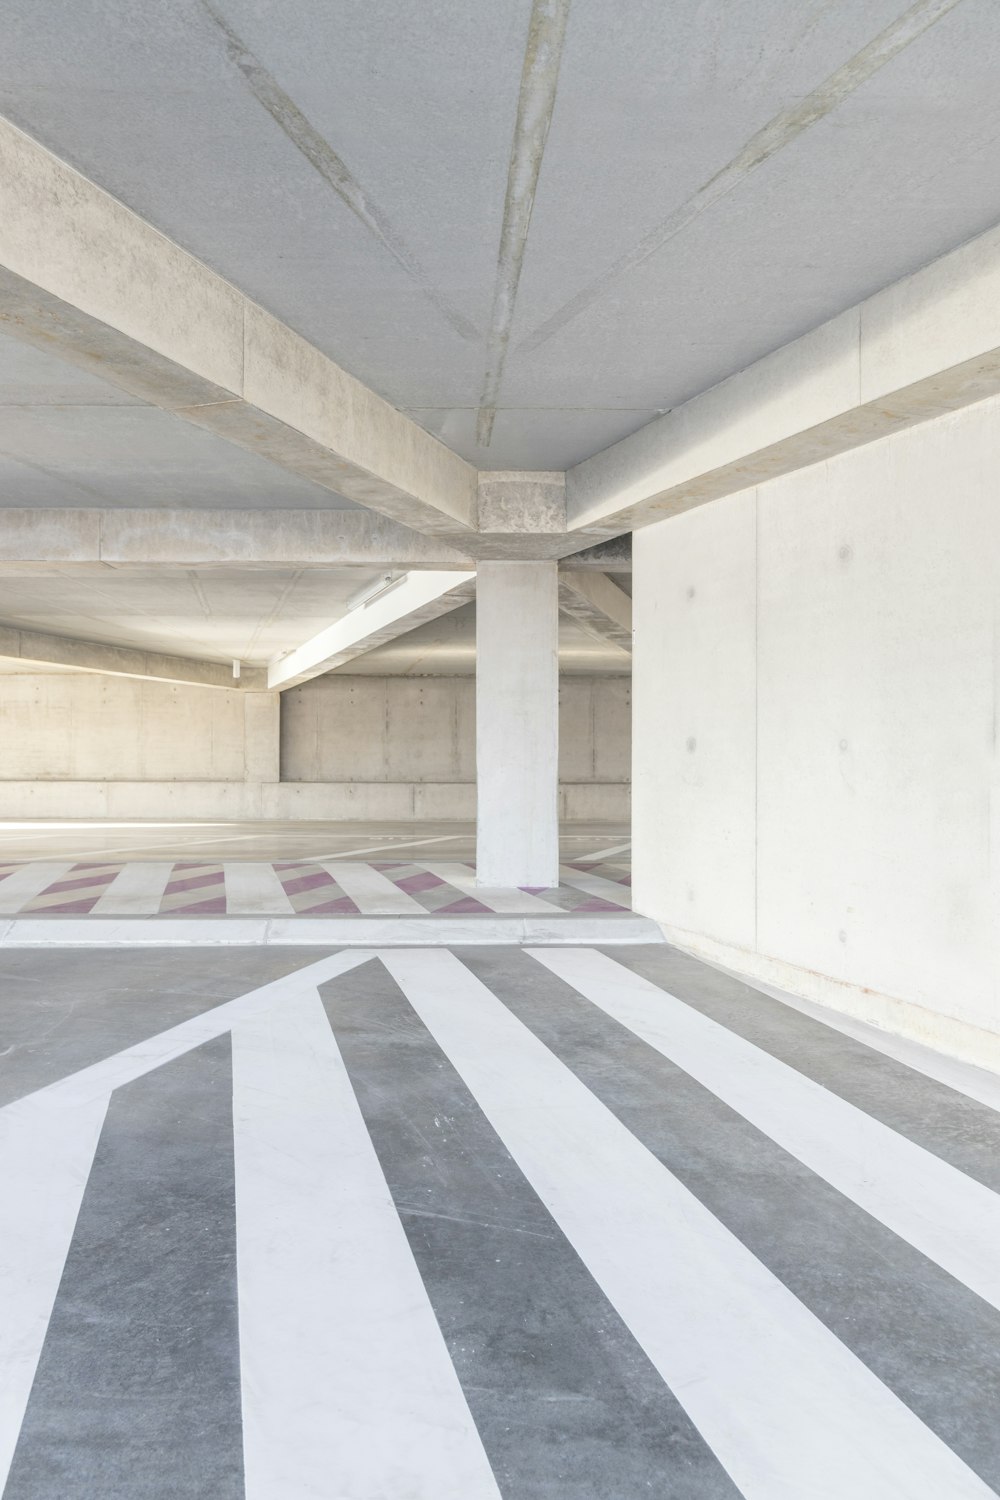 an empty parking garage with striped flooring